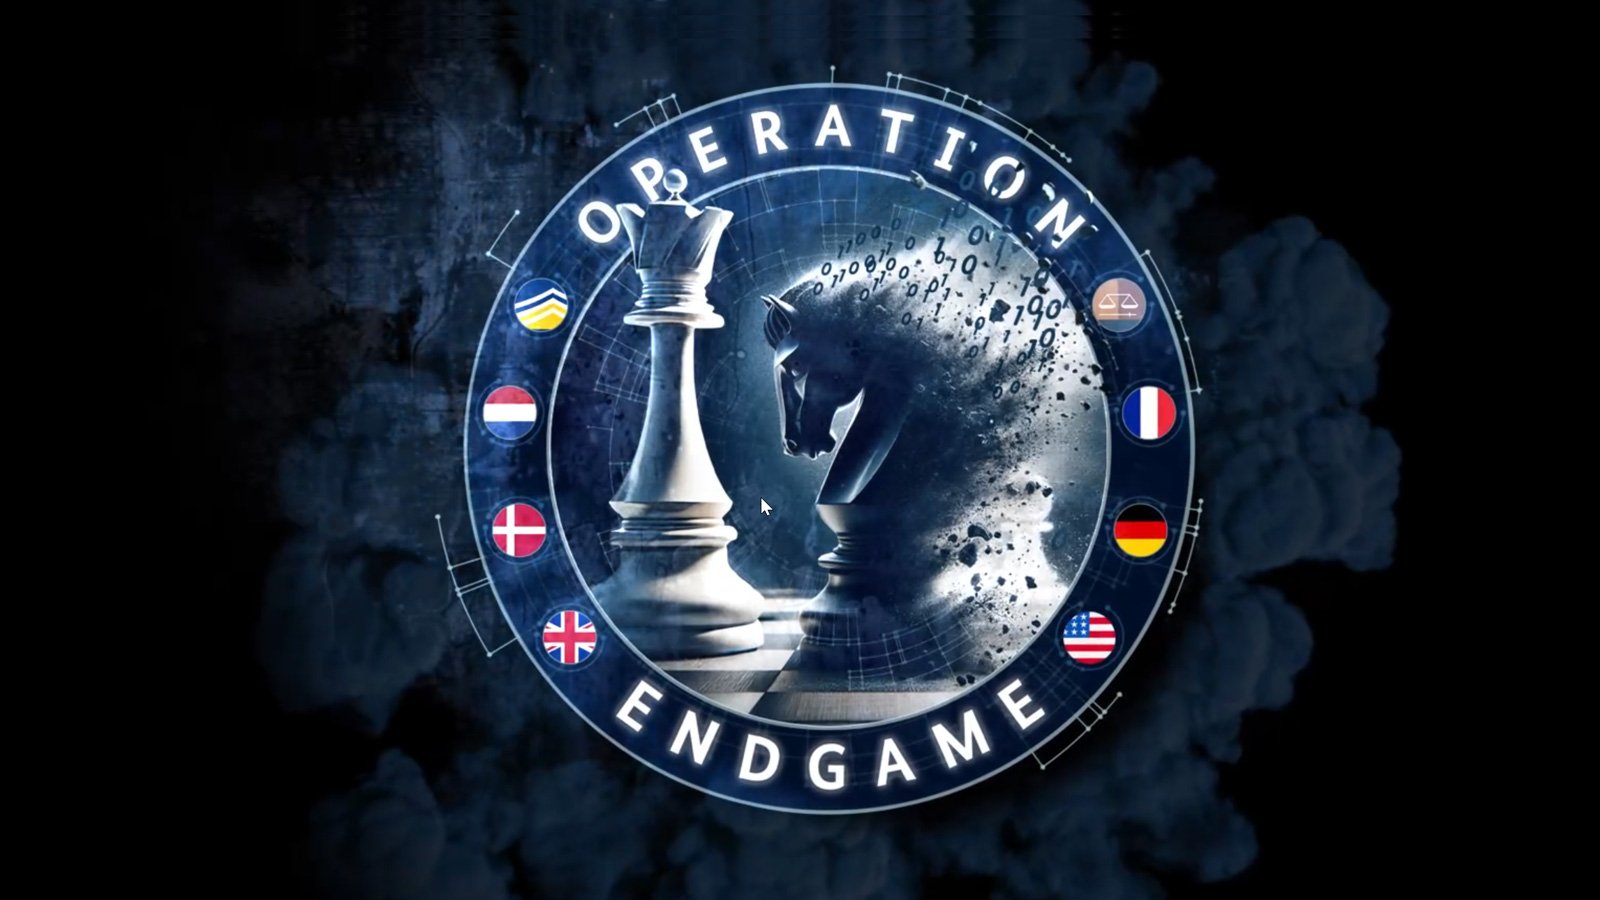 Operation Endgame